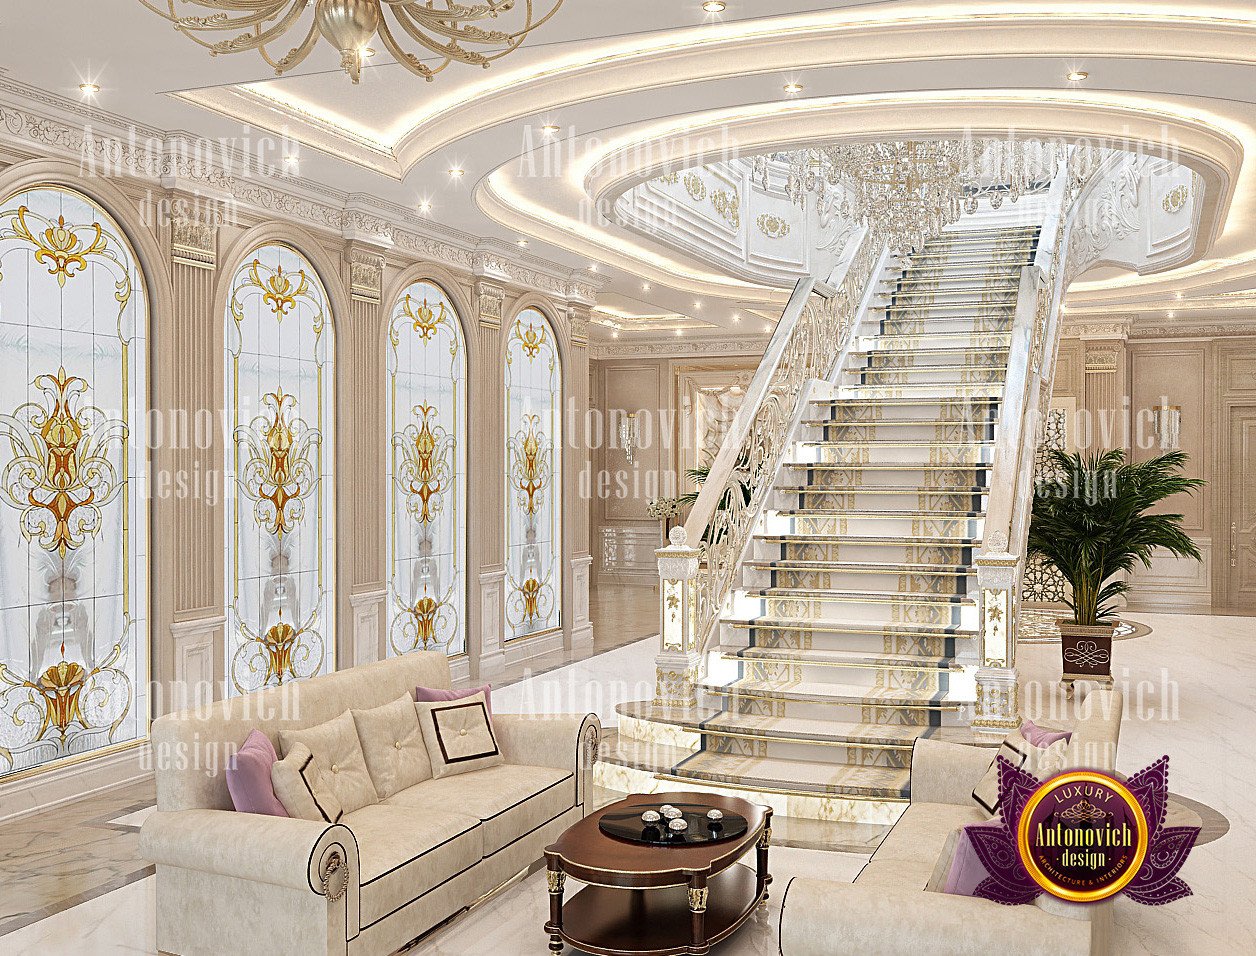 Revolutionize Your Space: Top UAE Interior Design Company Unveiled!